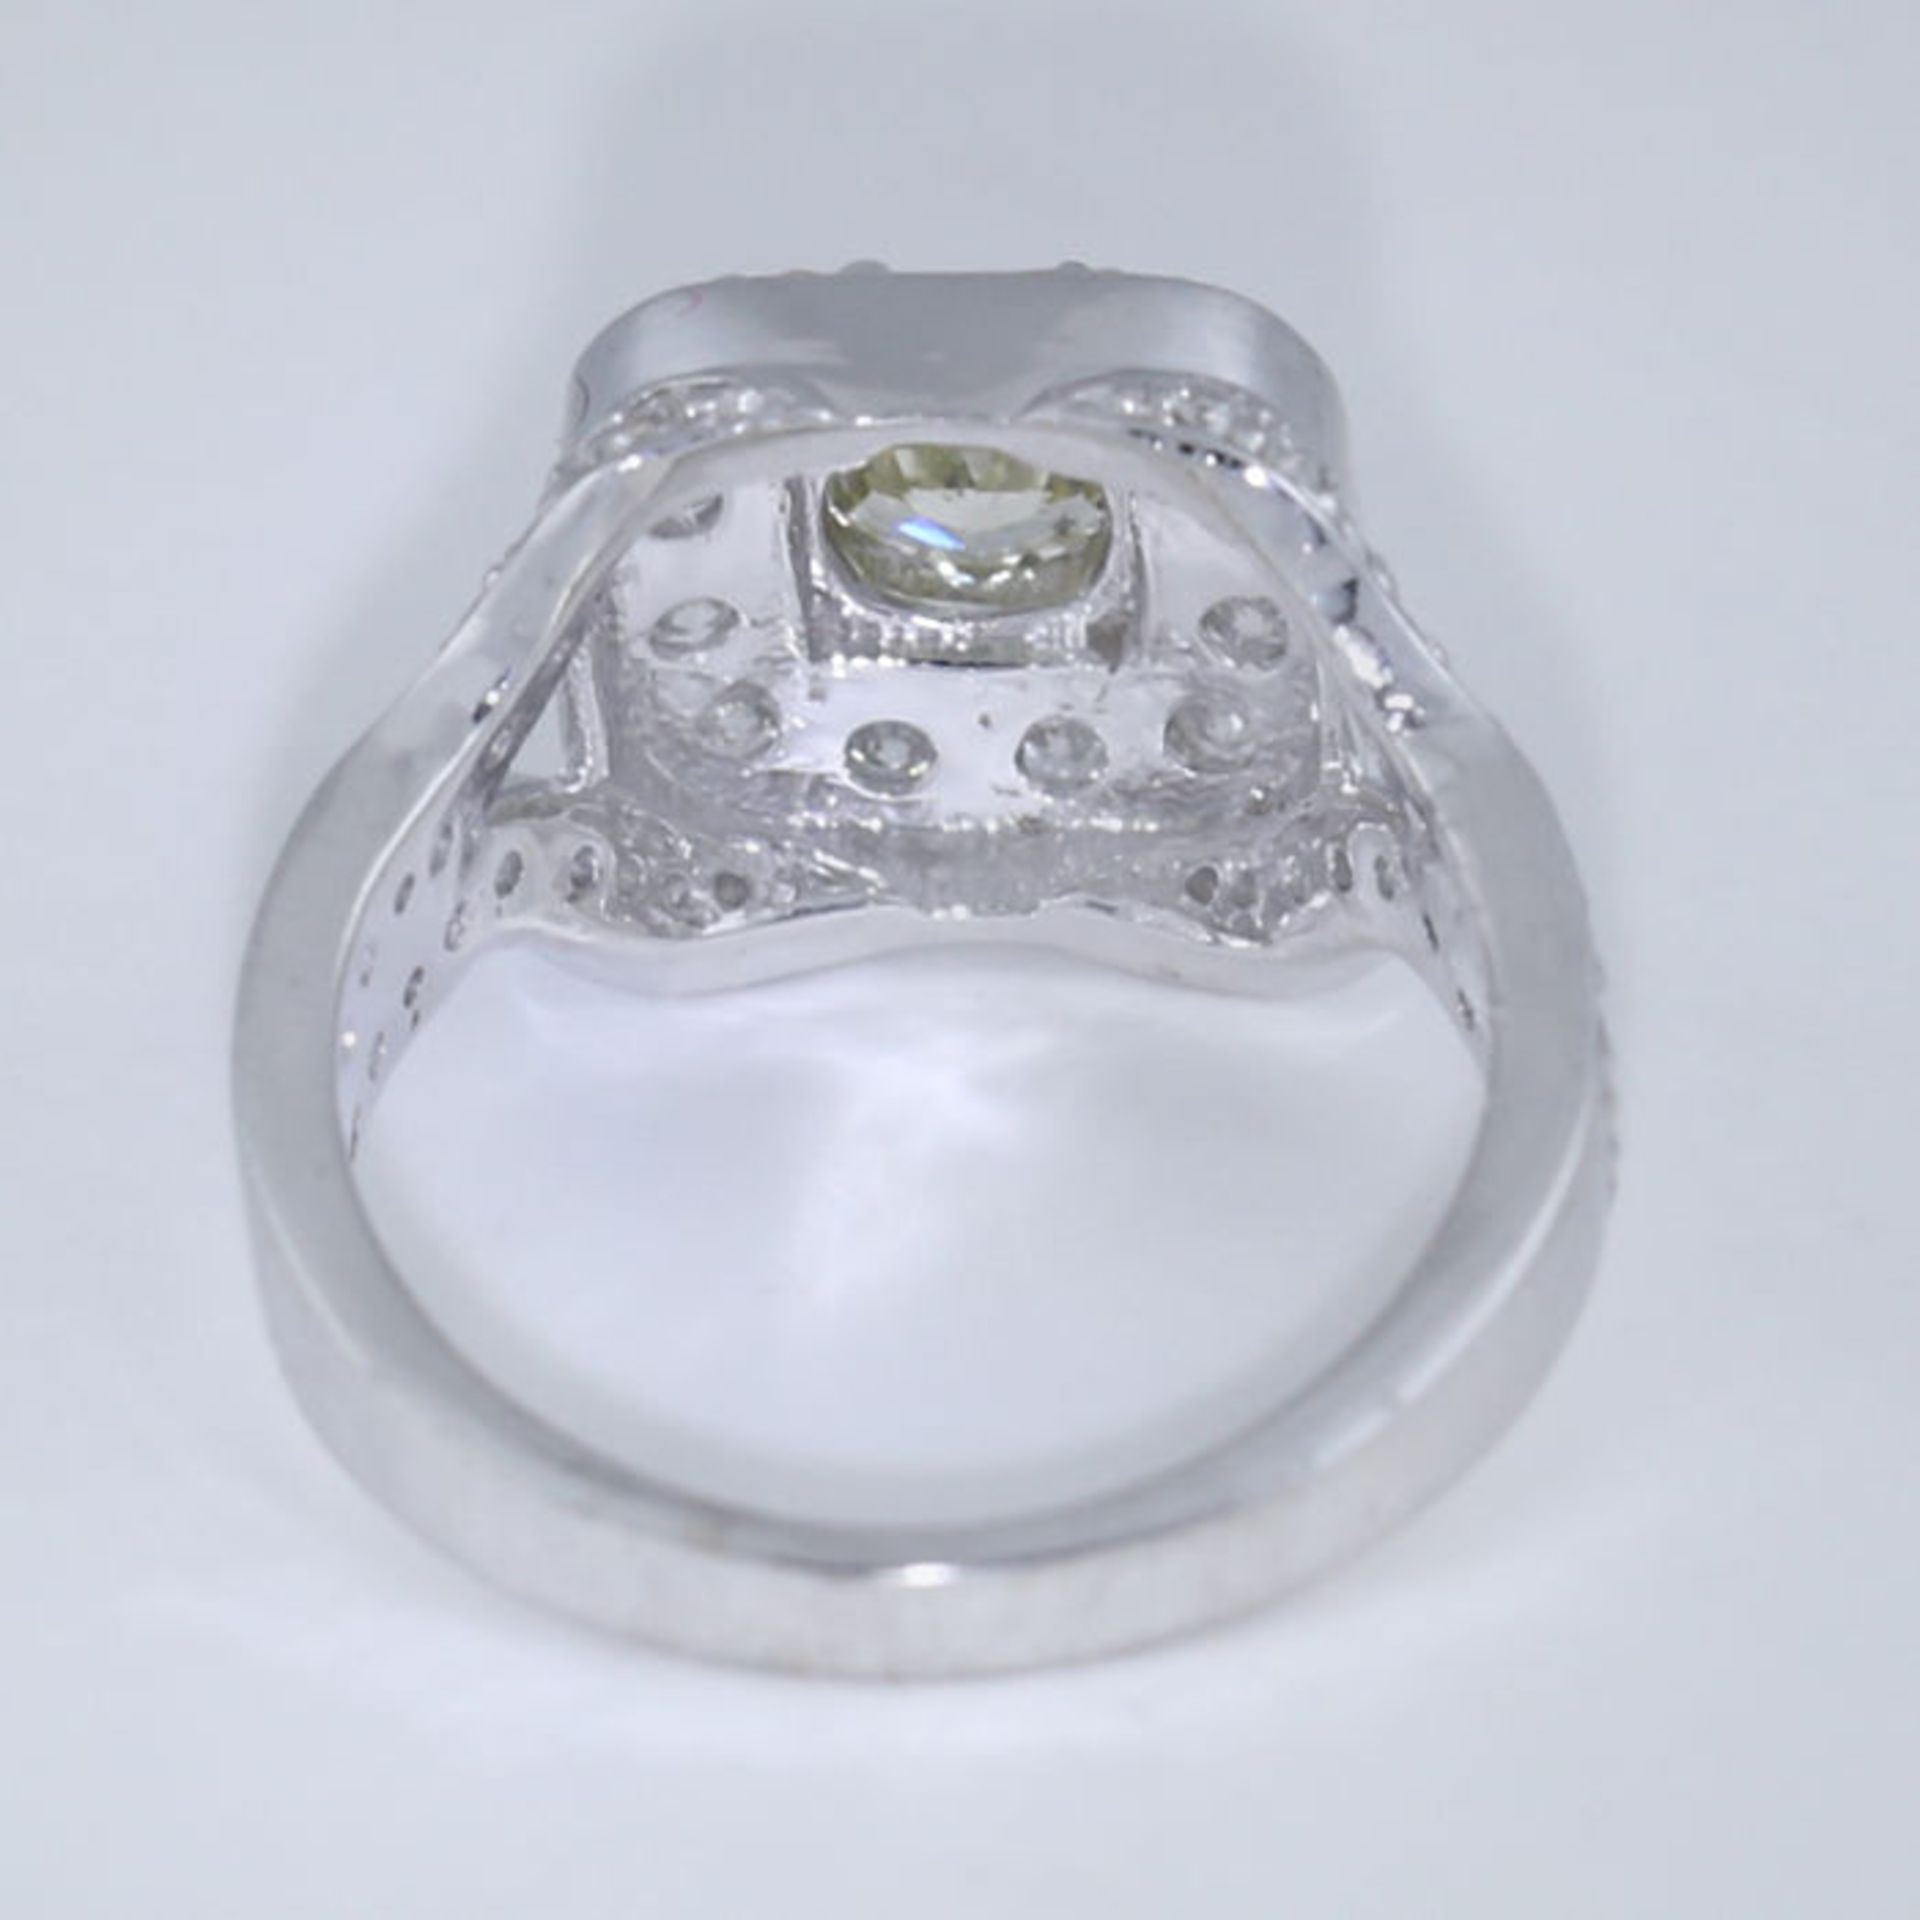 14 K / 585 White Gold Designer Solitaire Diamond (IGI Certified) Ring - Image 7 of 7